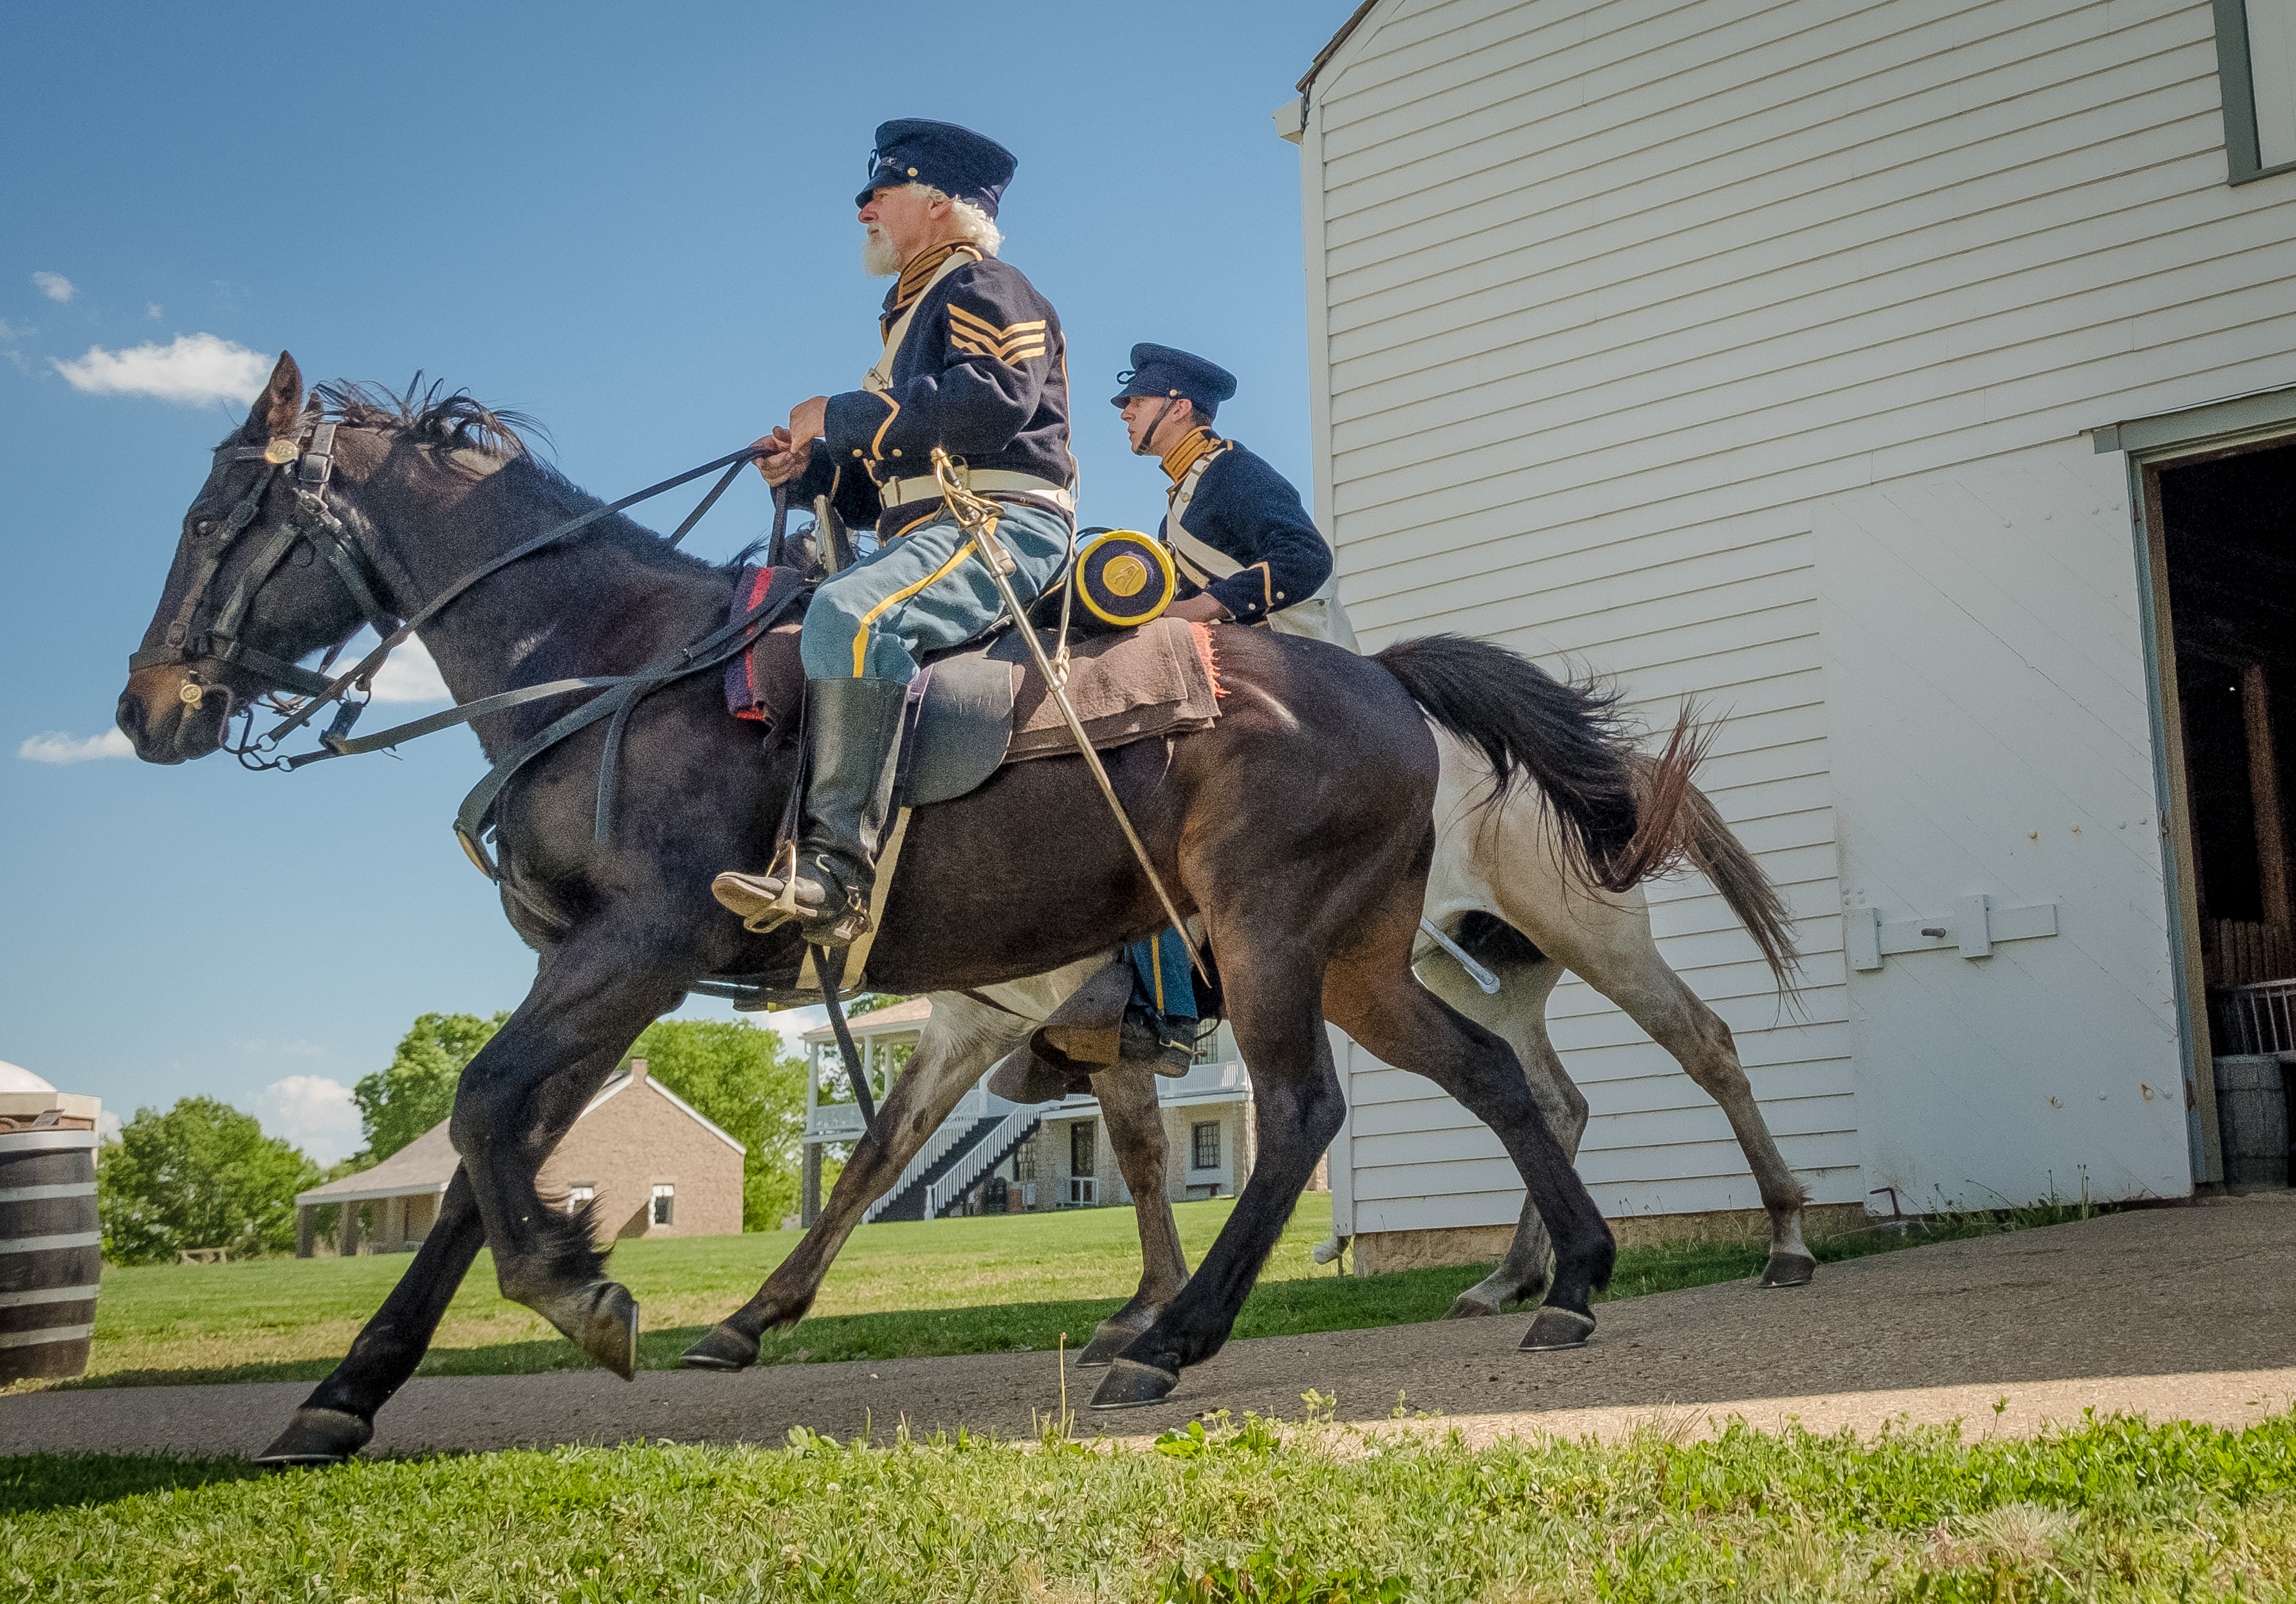 Fort Scott Military Re-enactment Horses & Soldiers - Kansas